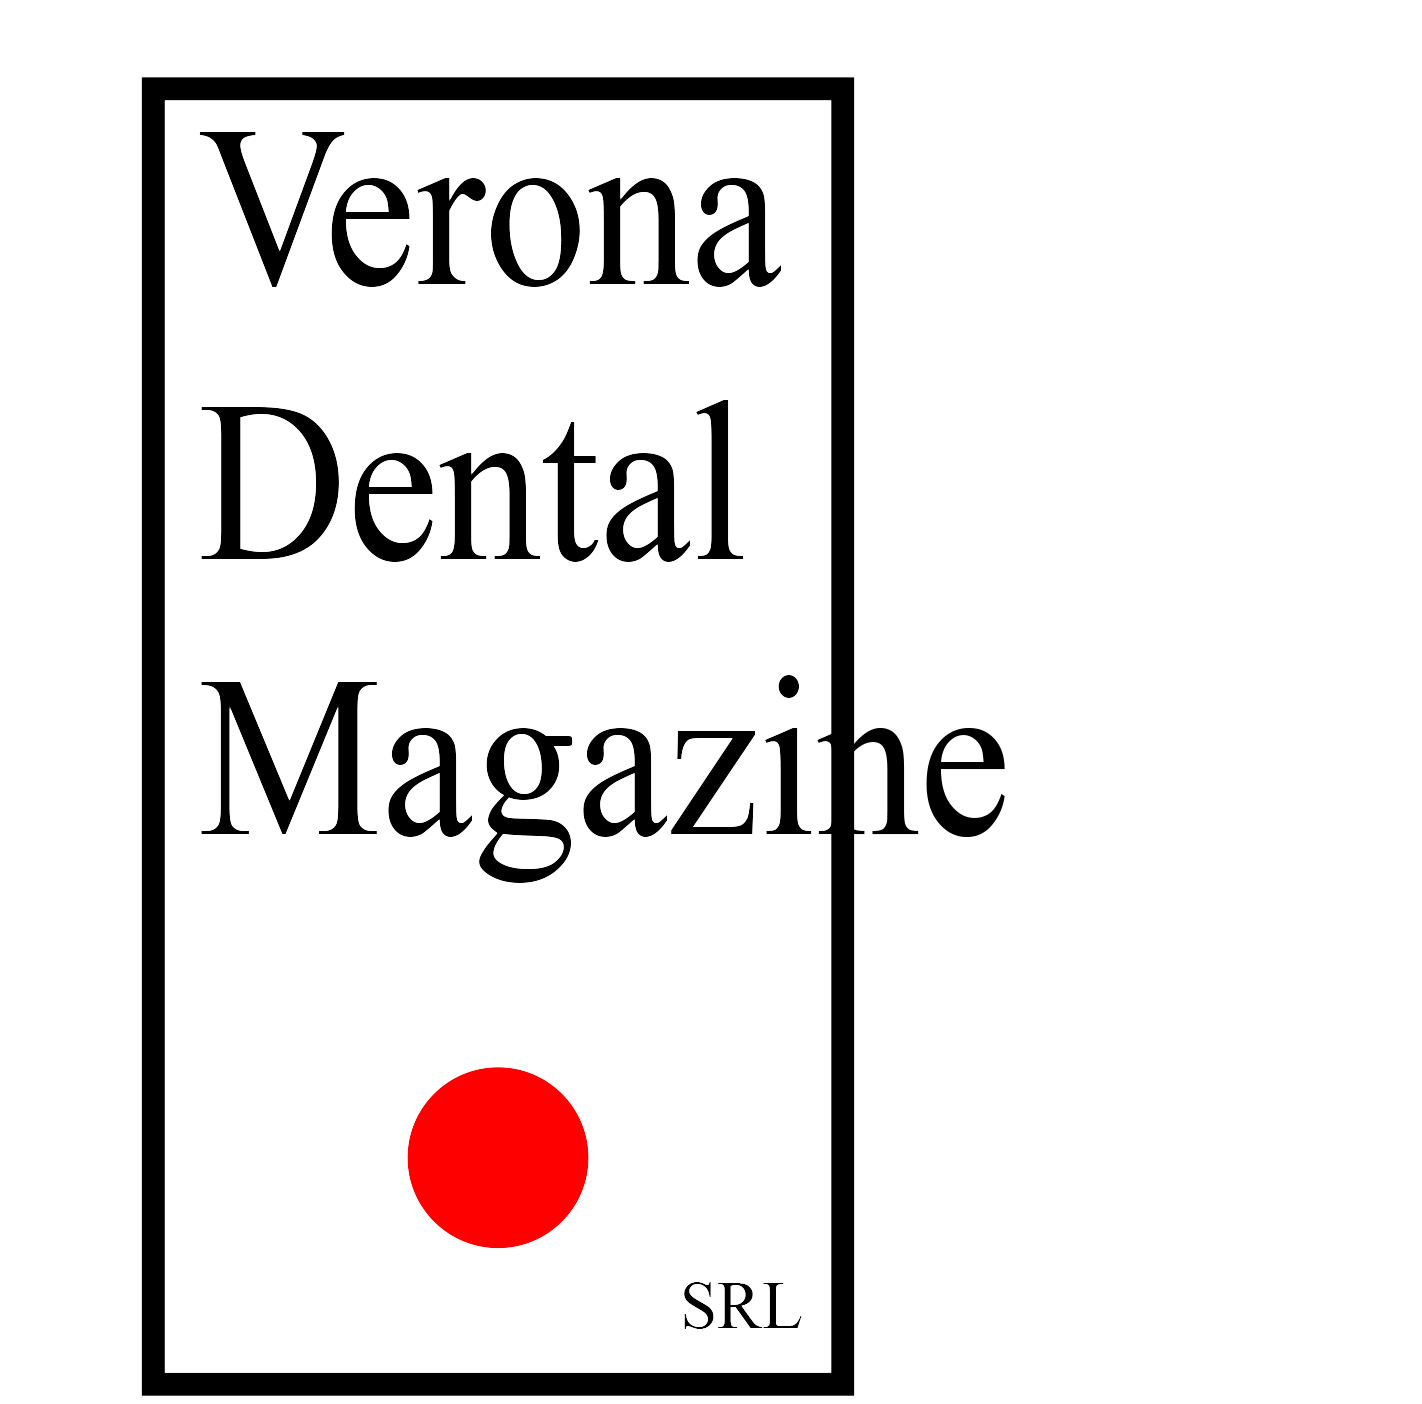 Verona Dental Magazine